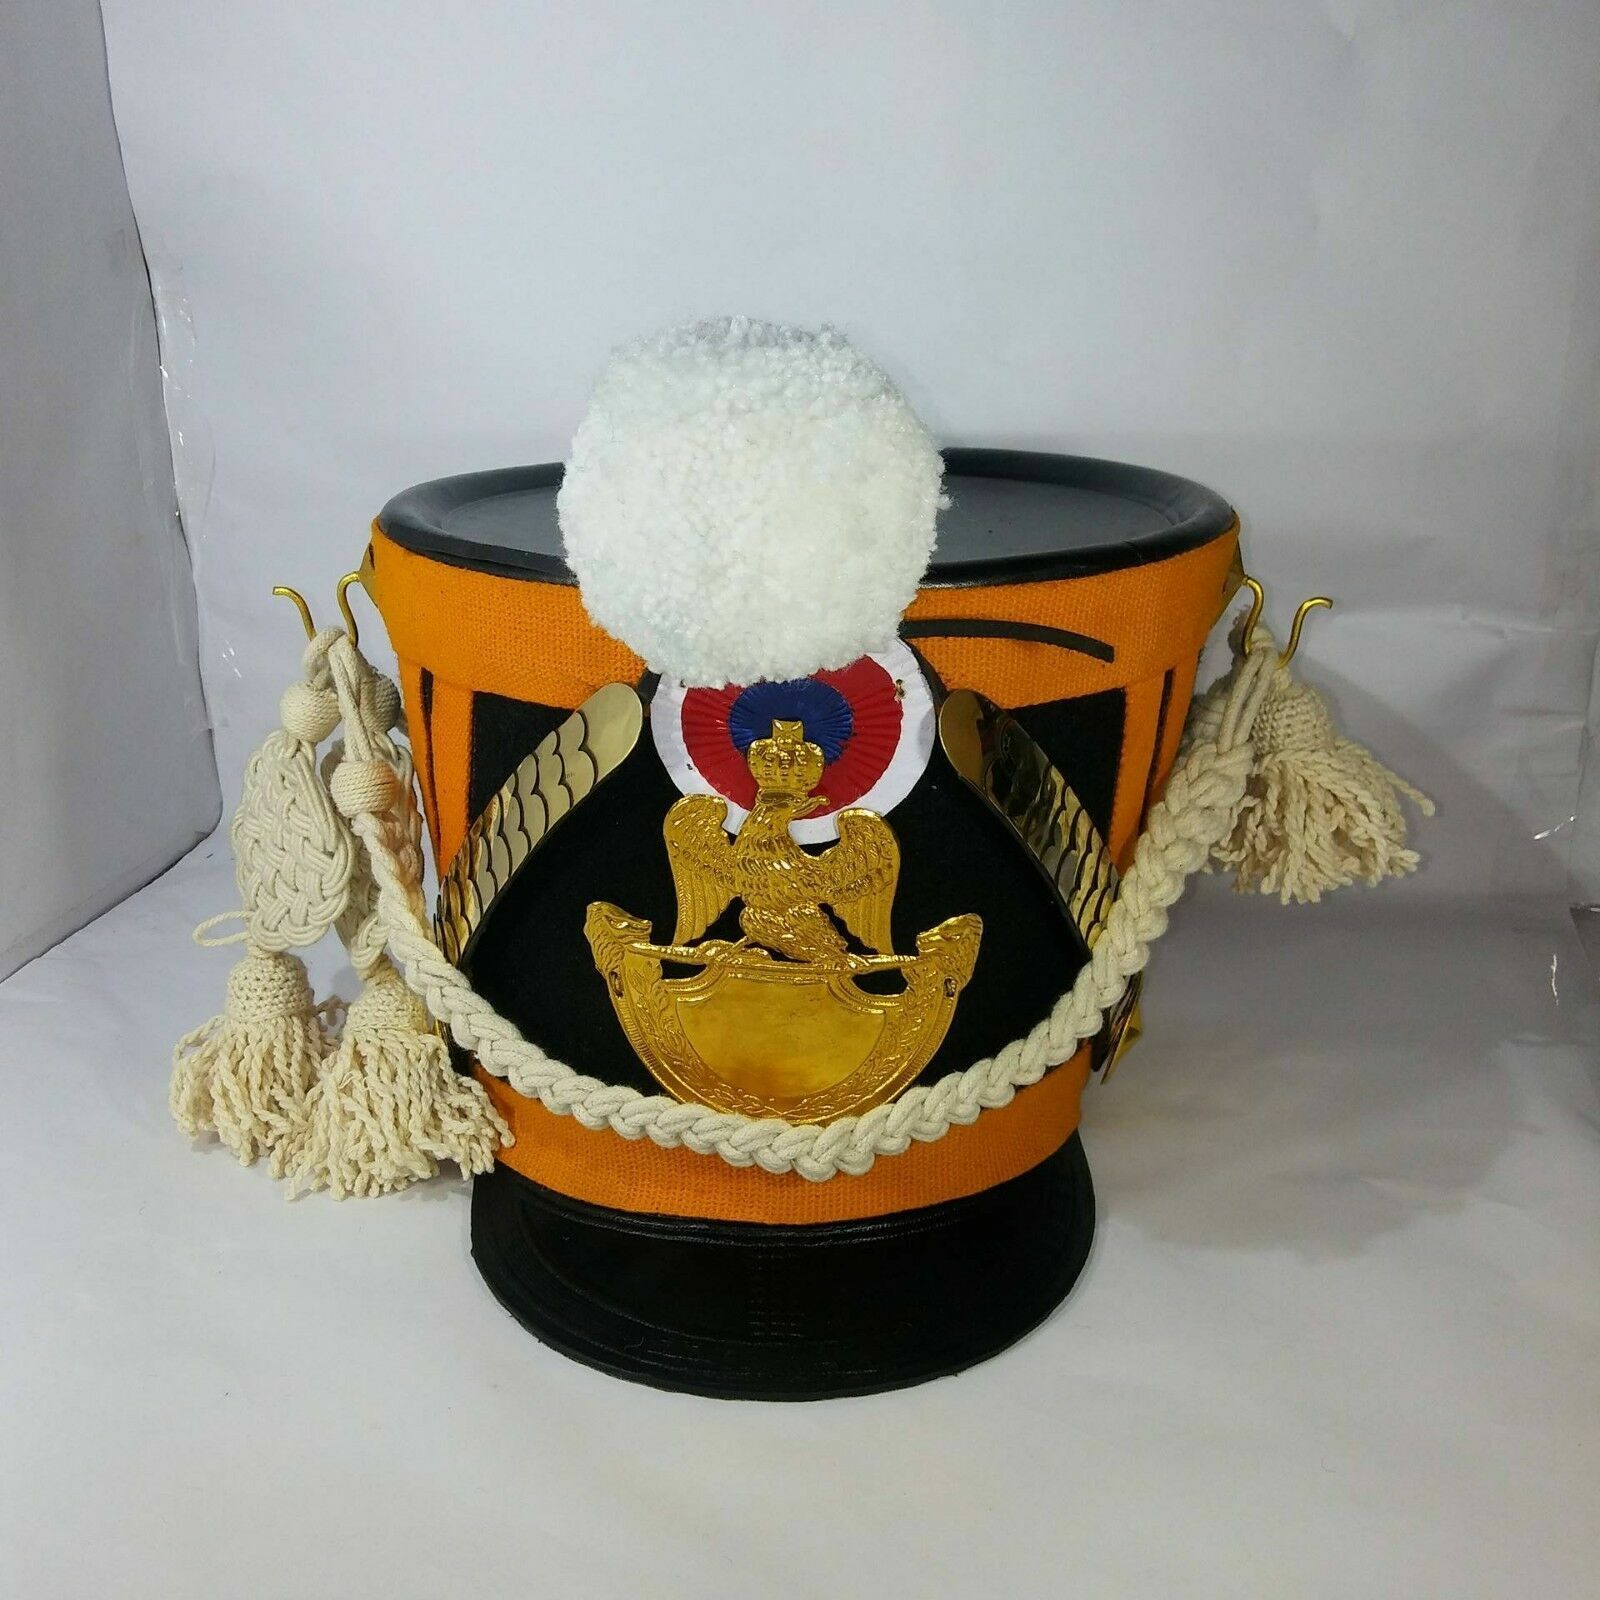 Best Quality French Napoleonic Shako Helmet, SHAKO HELMETs with 